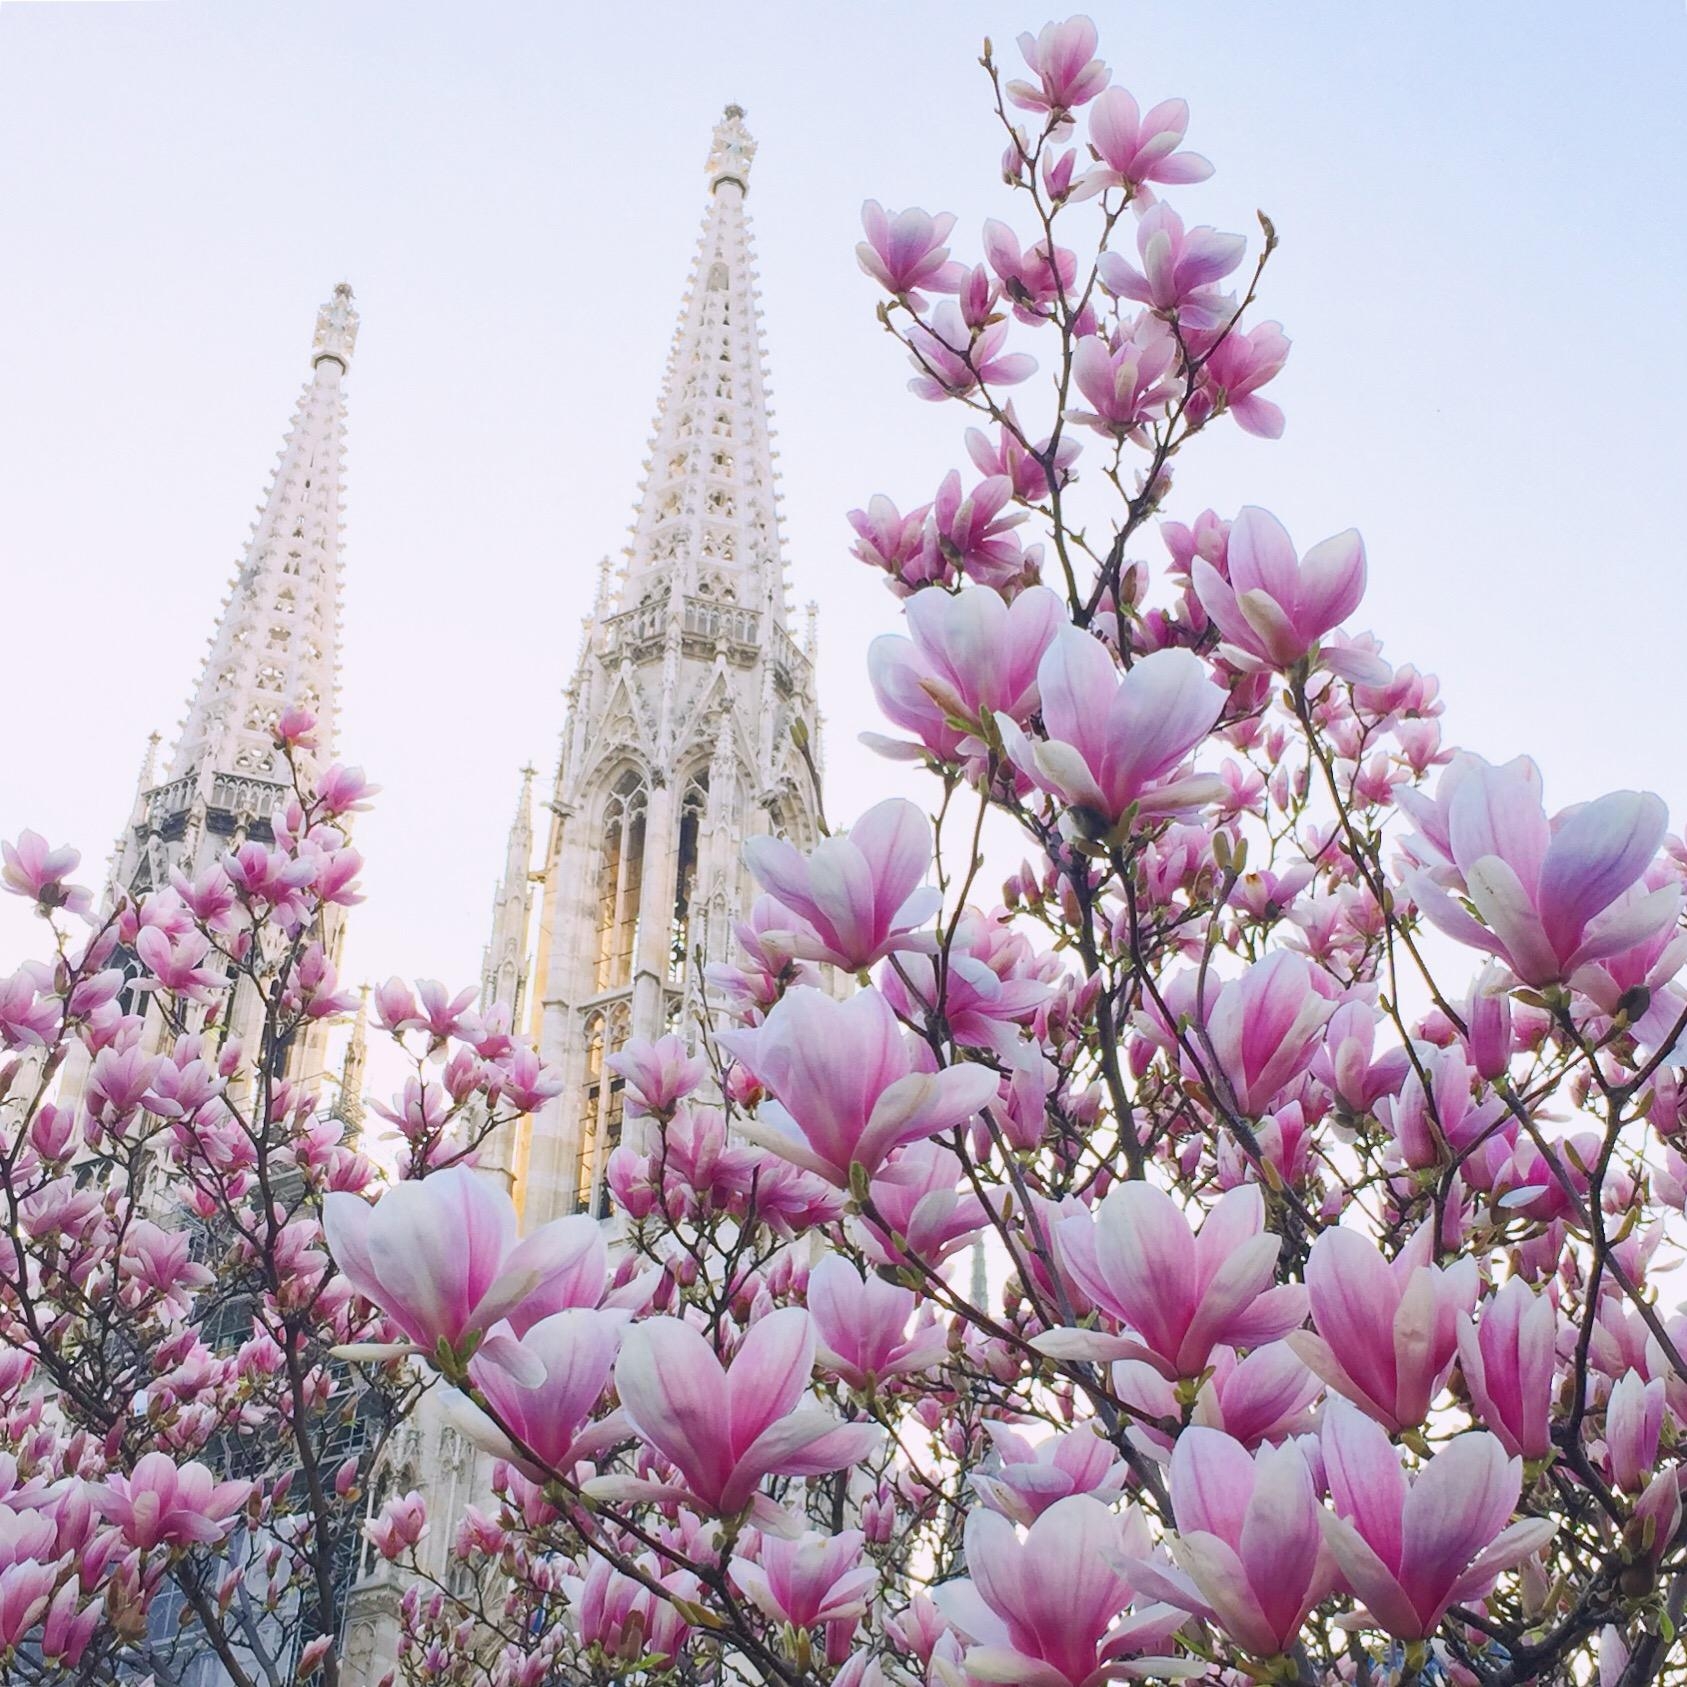 Frühling in Wien 🌸🐝☀️
#magnolie #frühling #allesblüht #blütentraum #magnolienbaum #naturliebe #blossom 